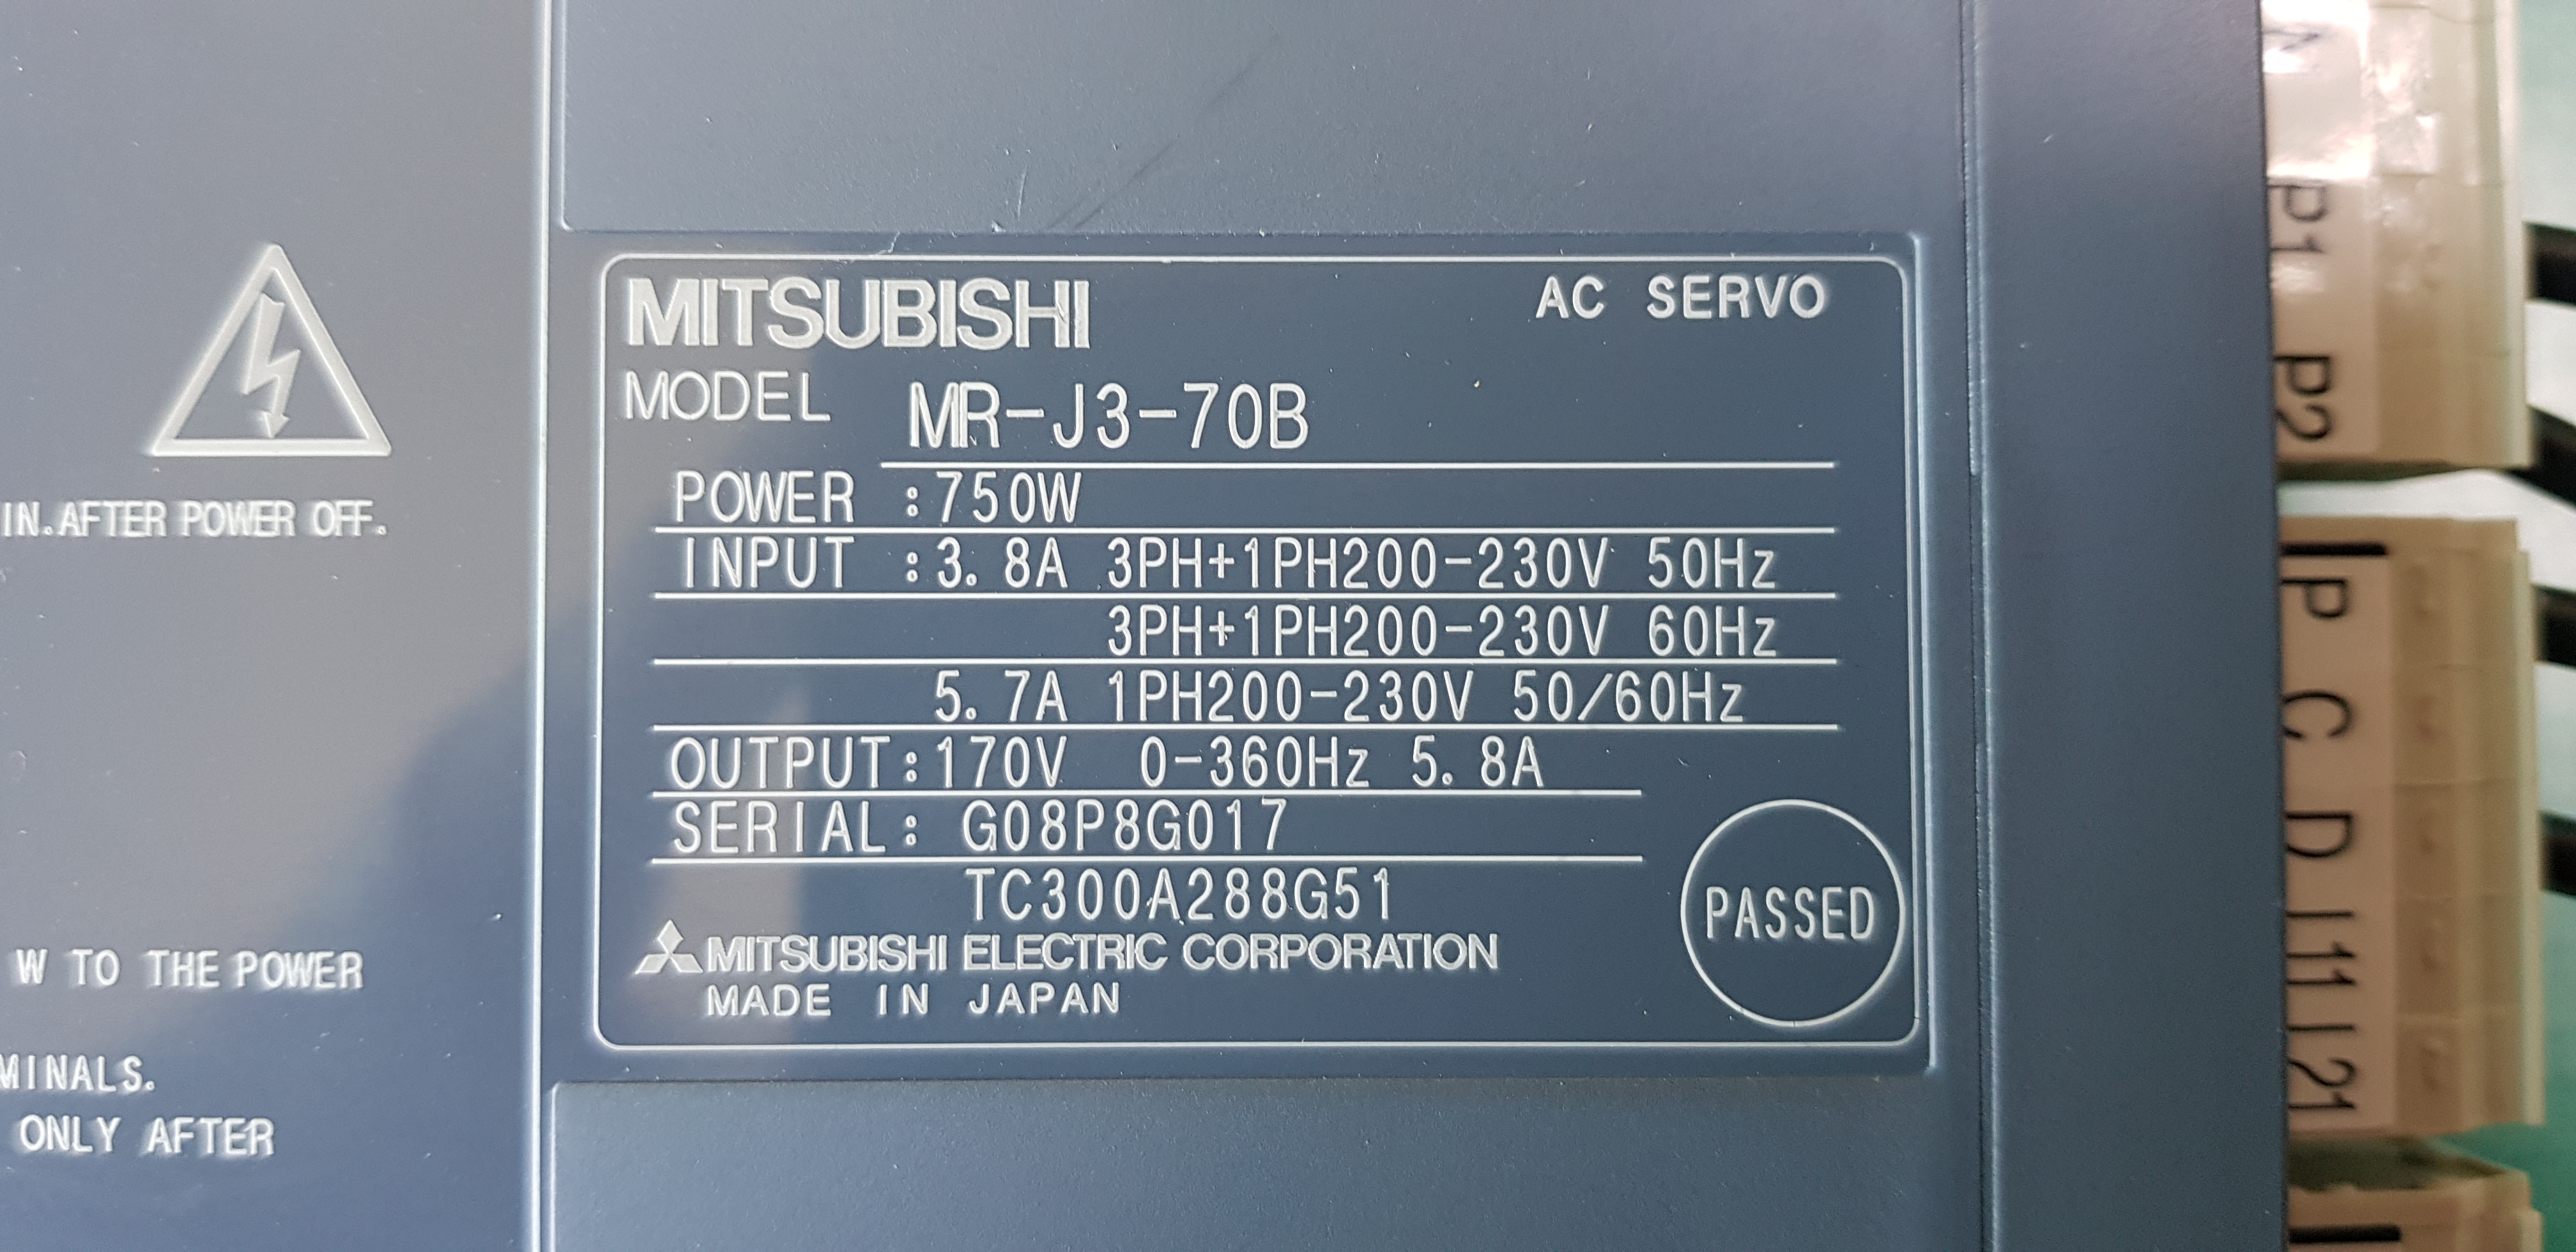 (A급-미사용품)MITSUBISHI AC SERVO DRIVER MR-J3-70B 미쓰비씨 서보 드라이브